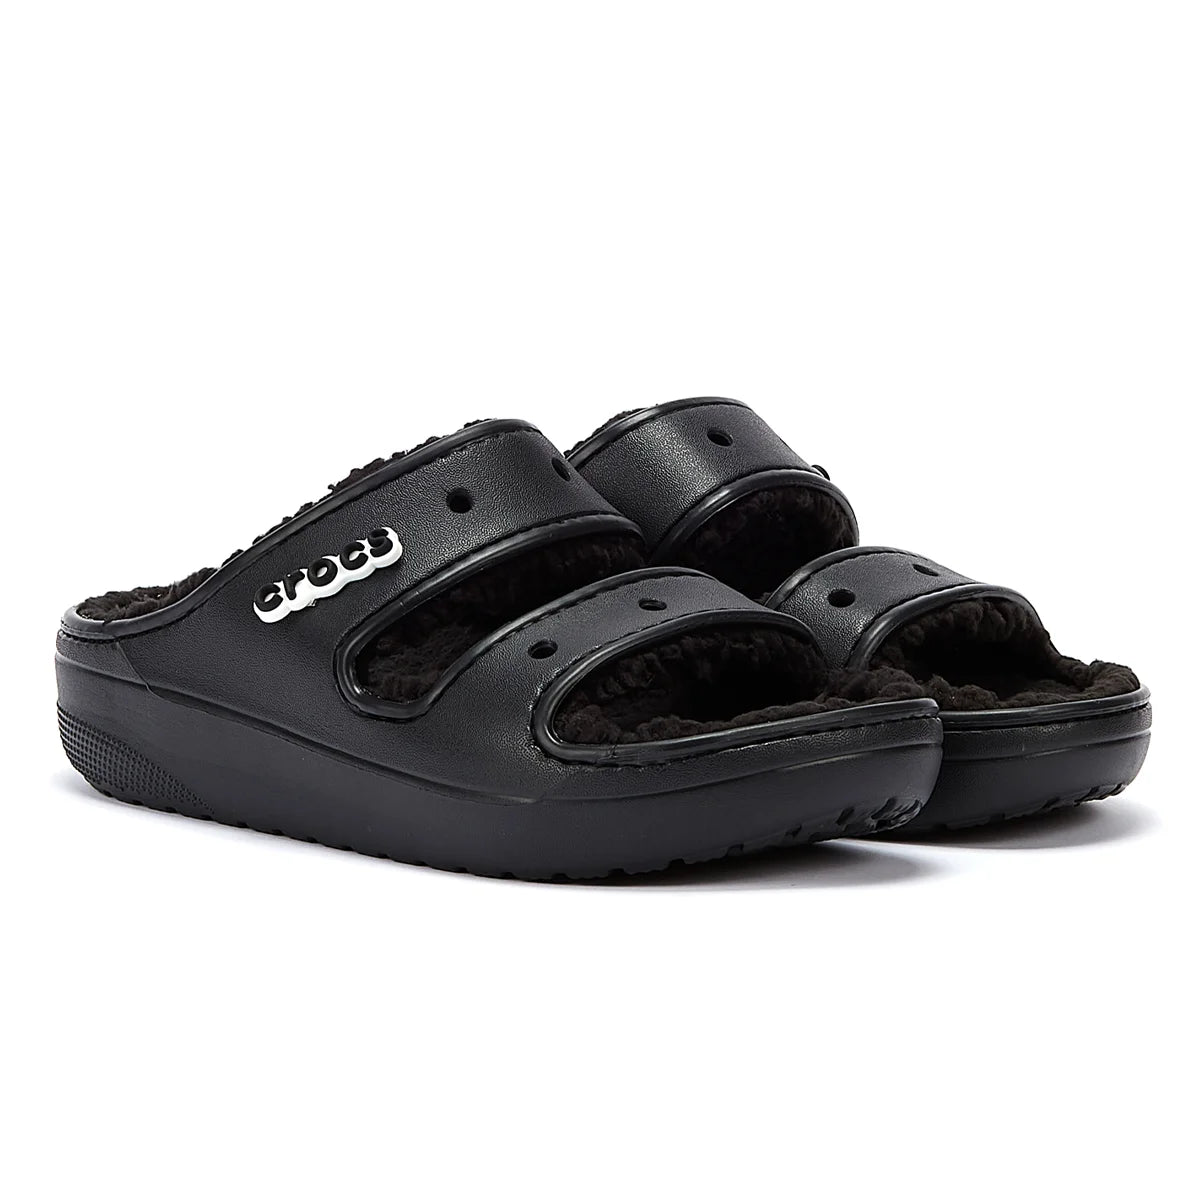 Crocs Classic Cozzzy Womens Black Sandals